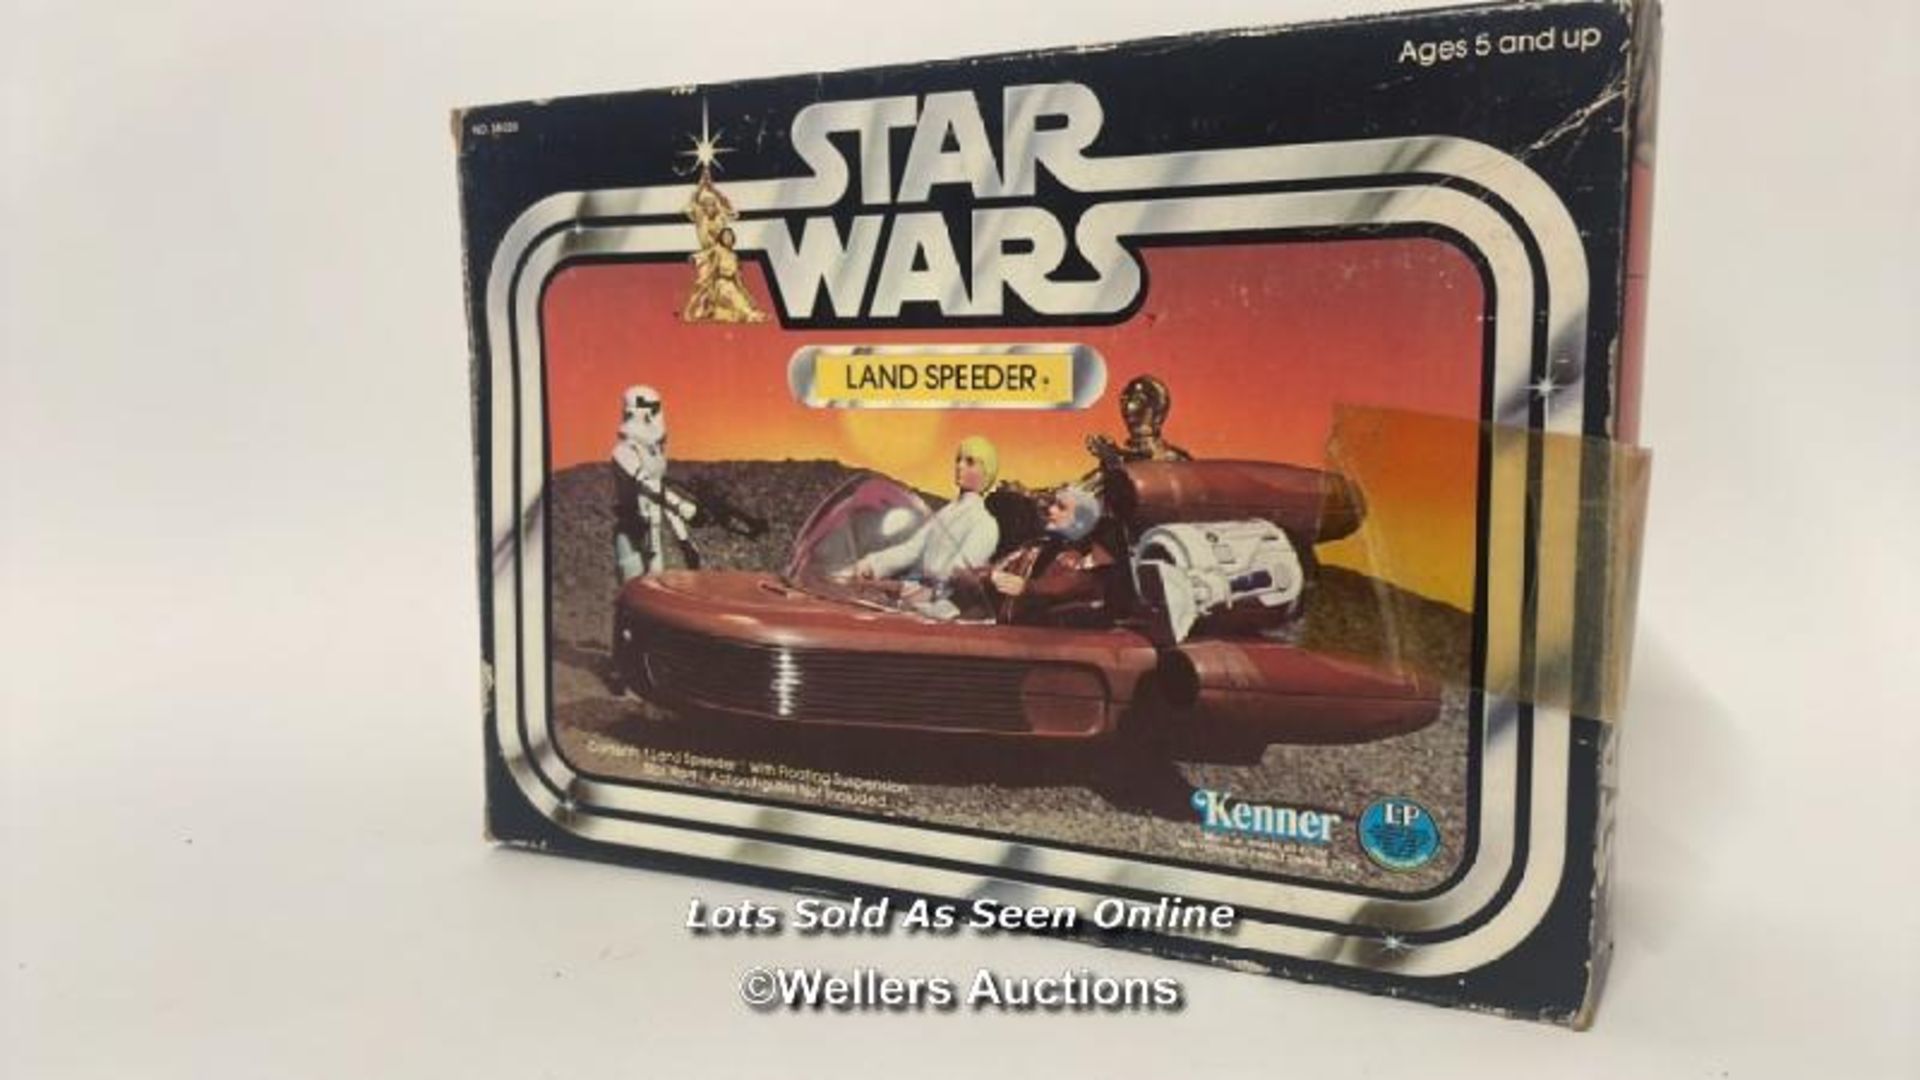 Kenner Vintage Star Wars Landspeeder, 1978 boxed, Landspeeder in good condition, windshield not - Image 8 of 10